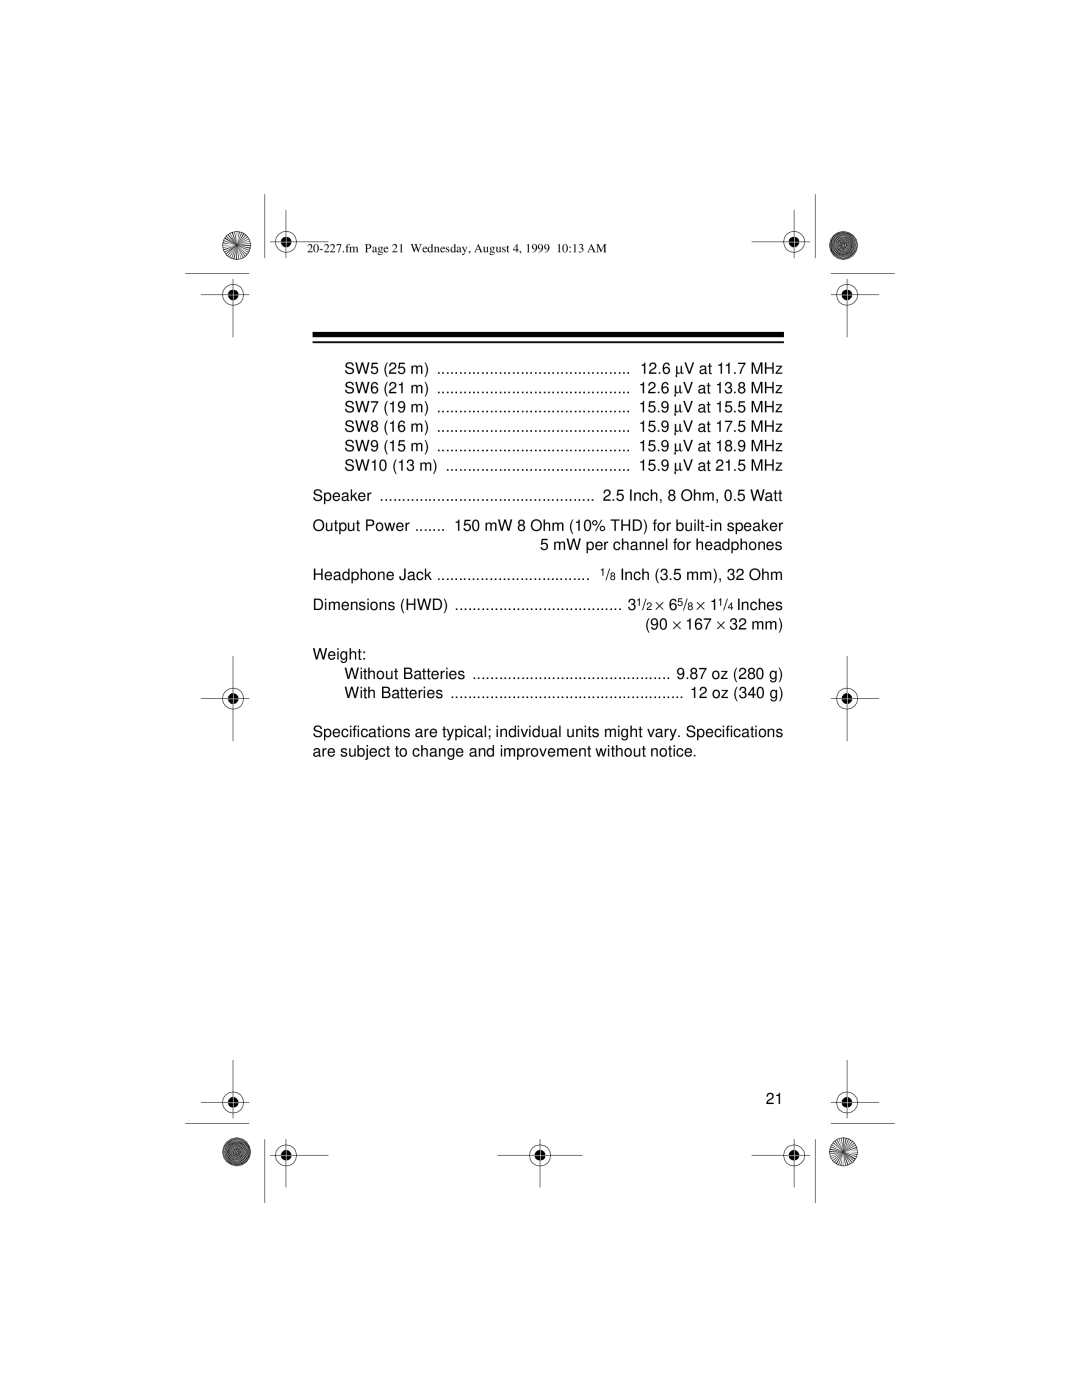 Radio Shack DX-397 owner manual 12.6 μV at 11.7 MHz 